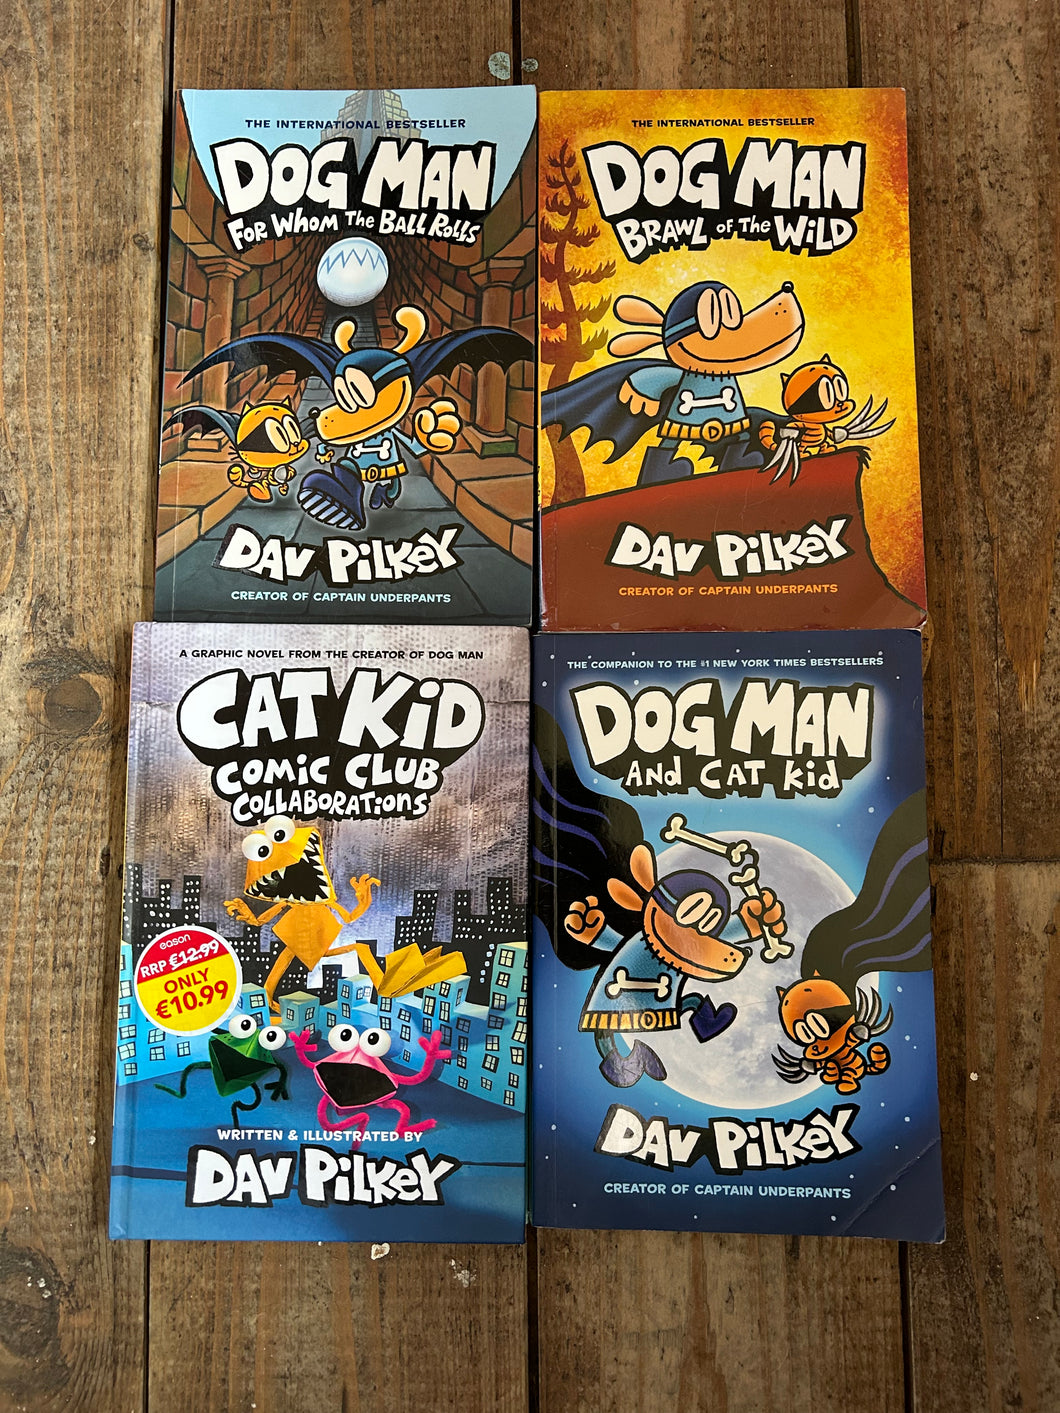 Dogman&Cat Kid set by Dav Pilkey